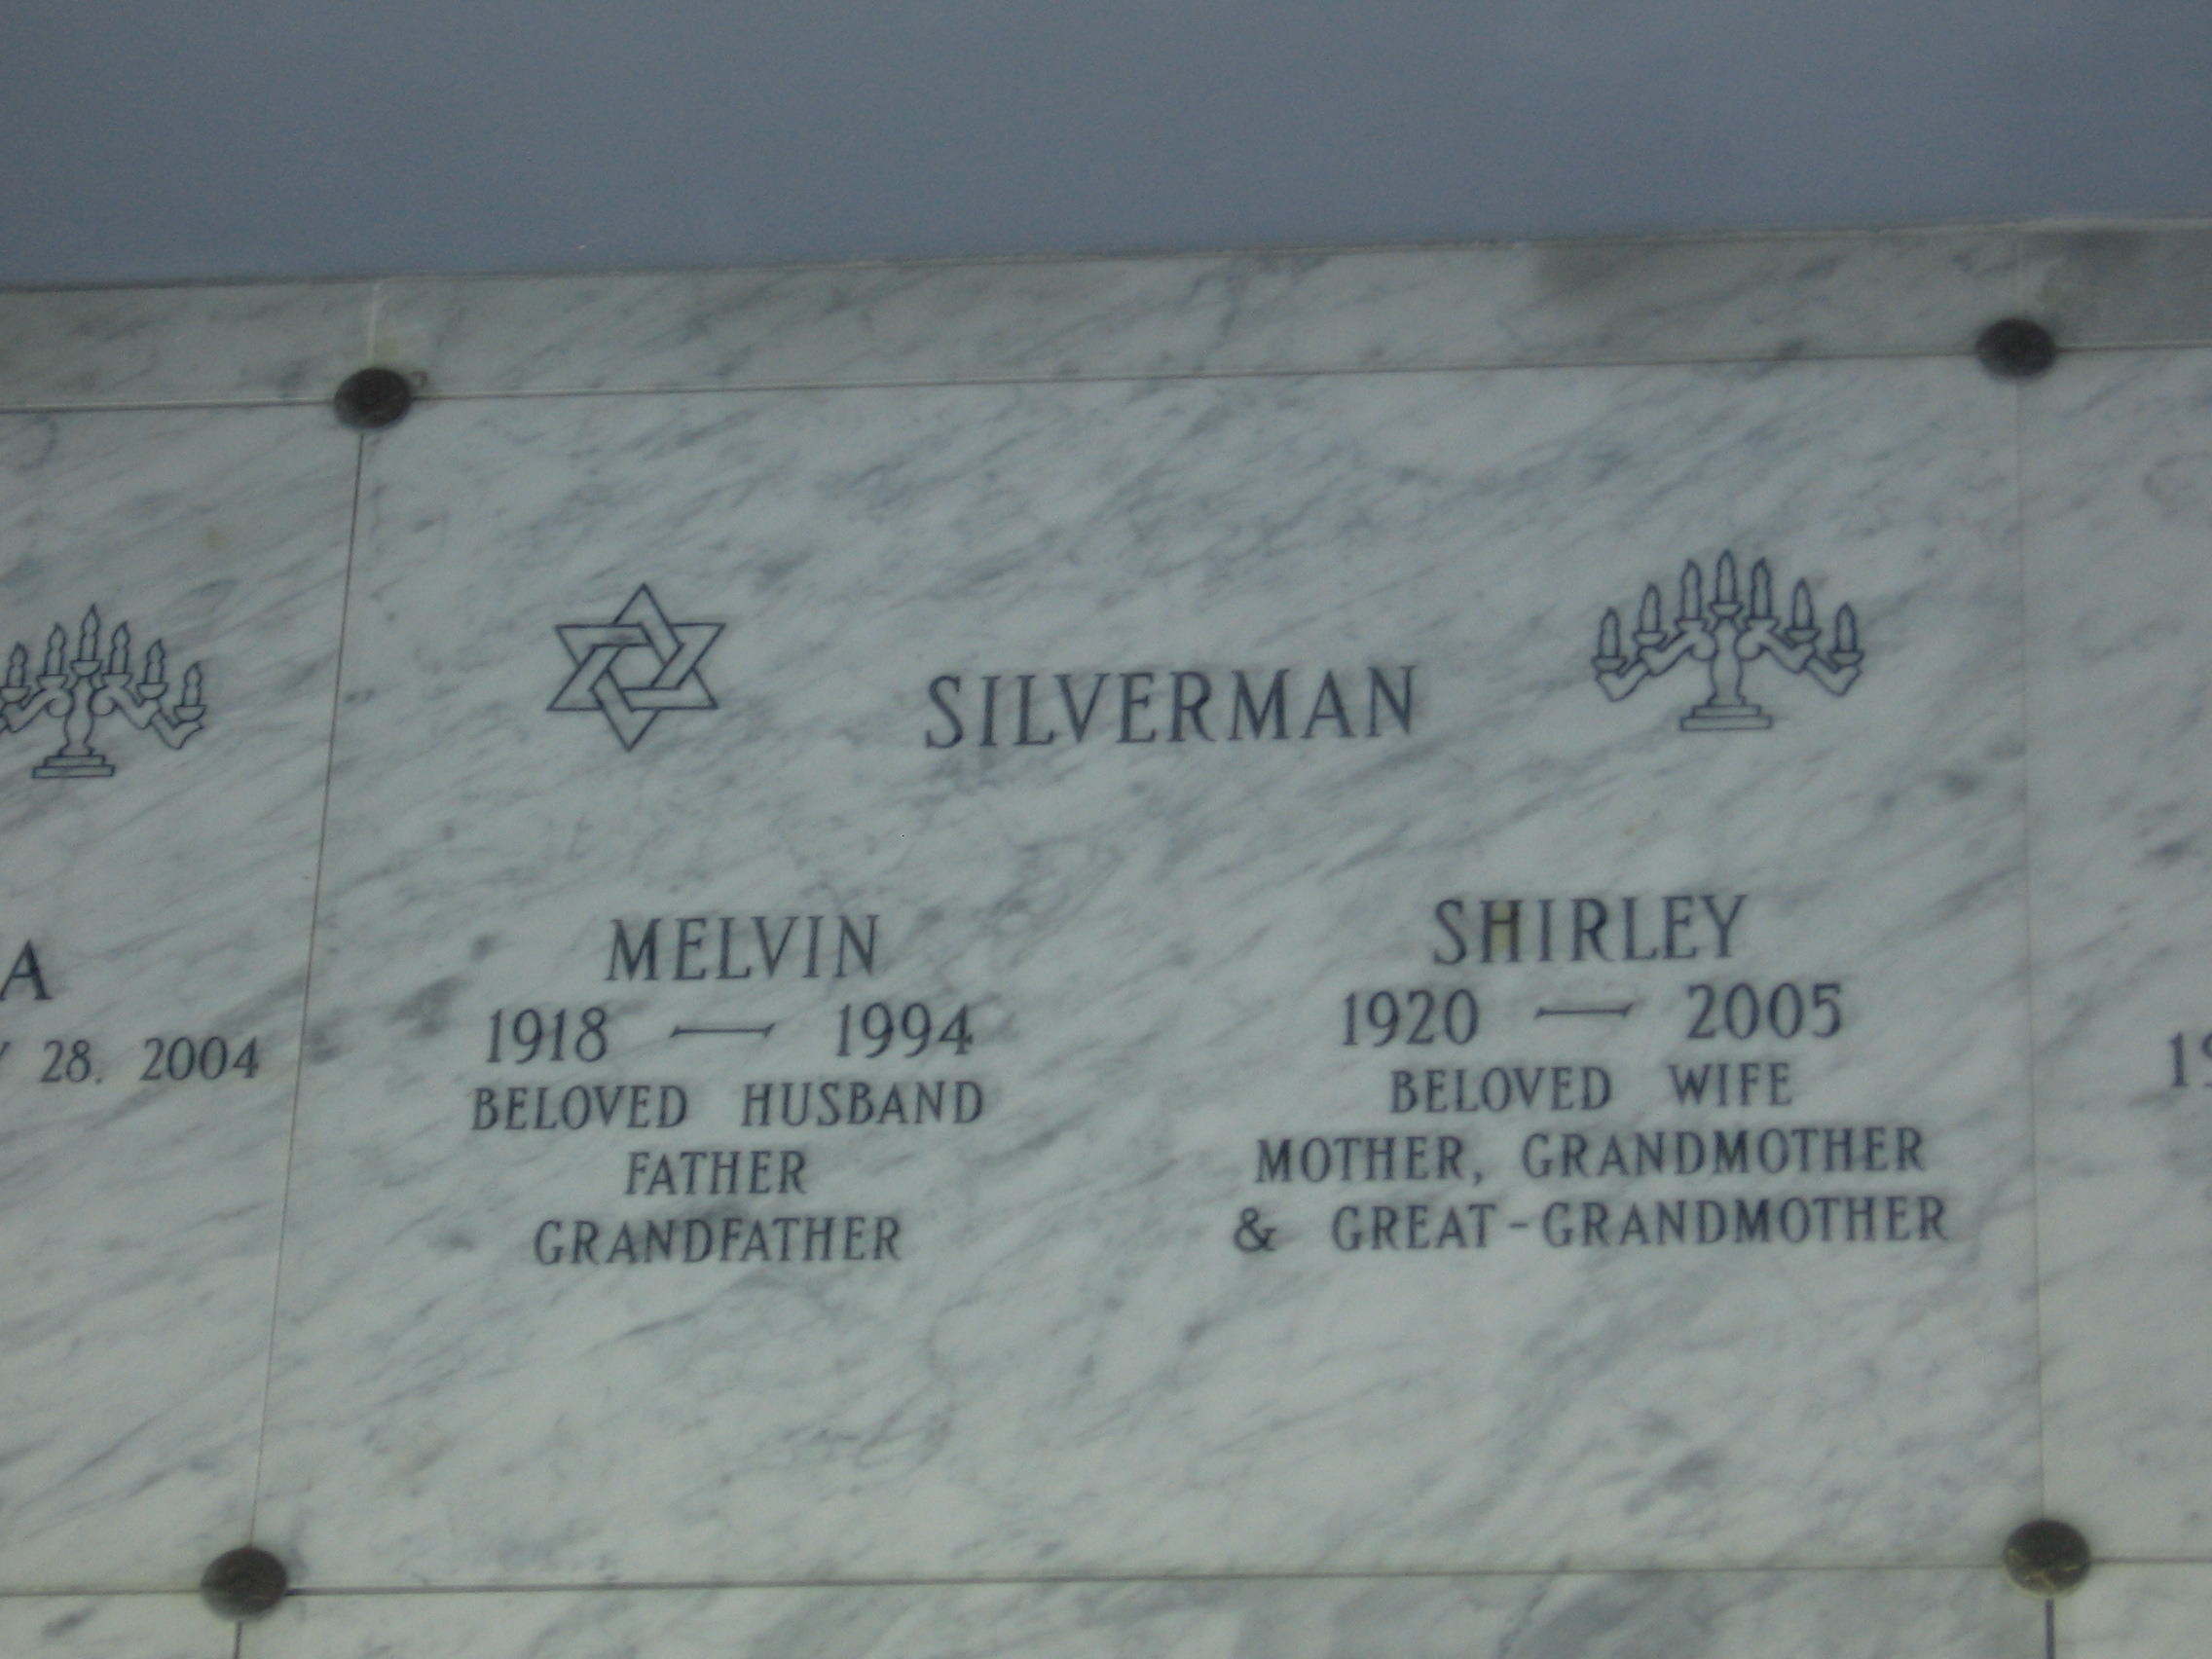 Melvin Silverman